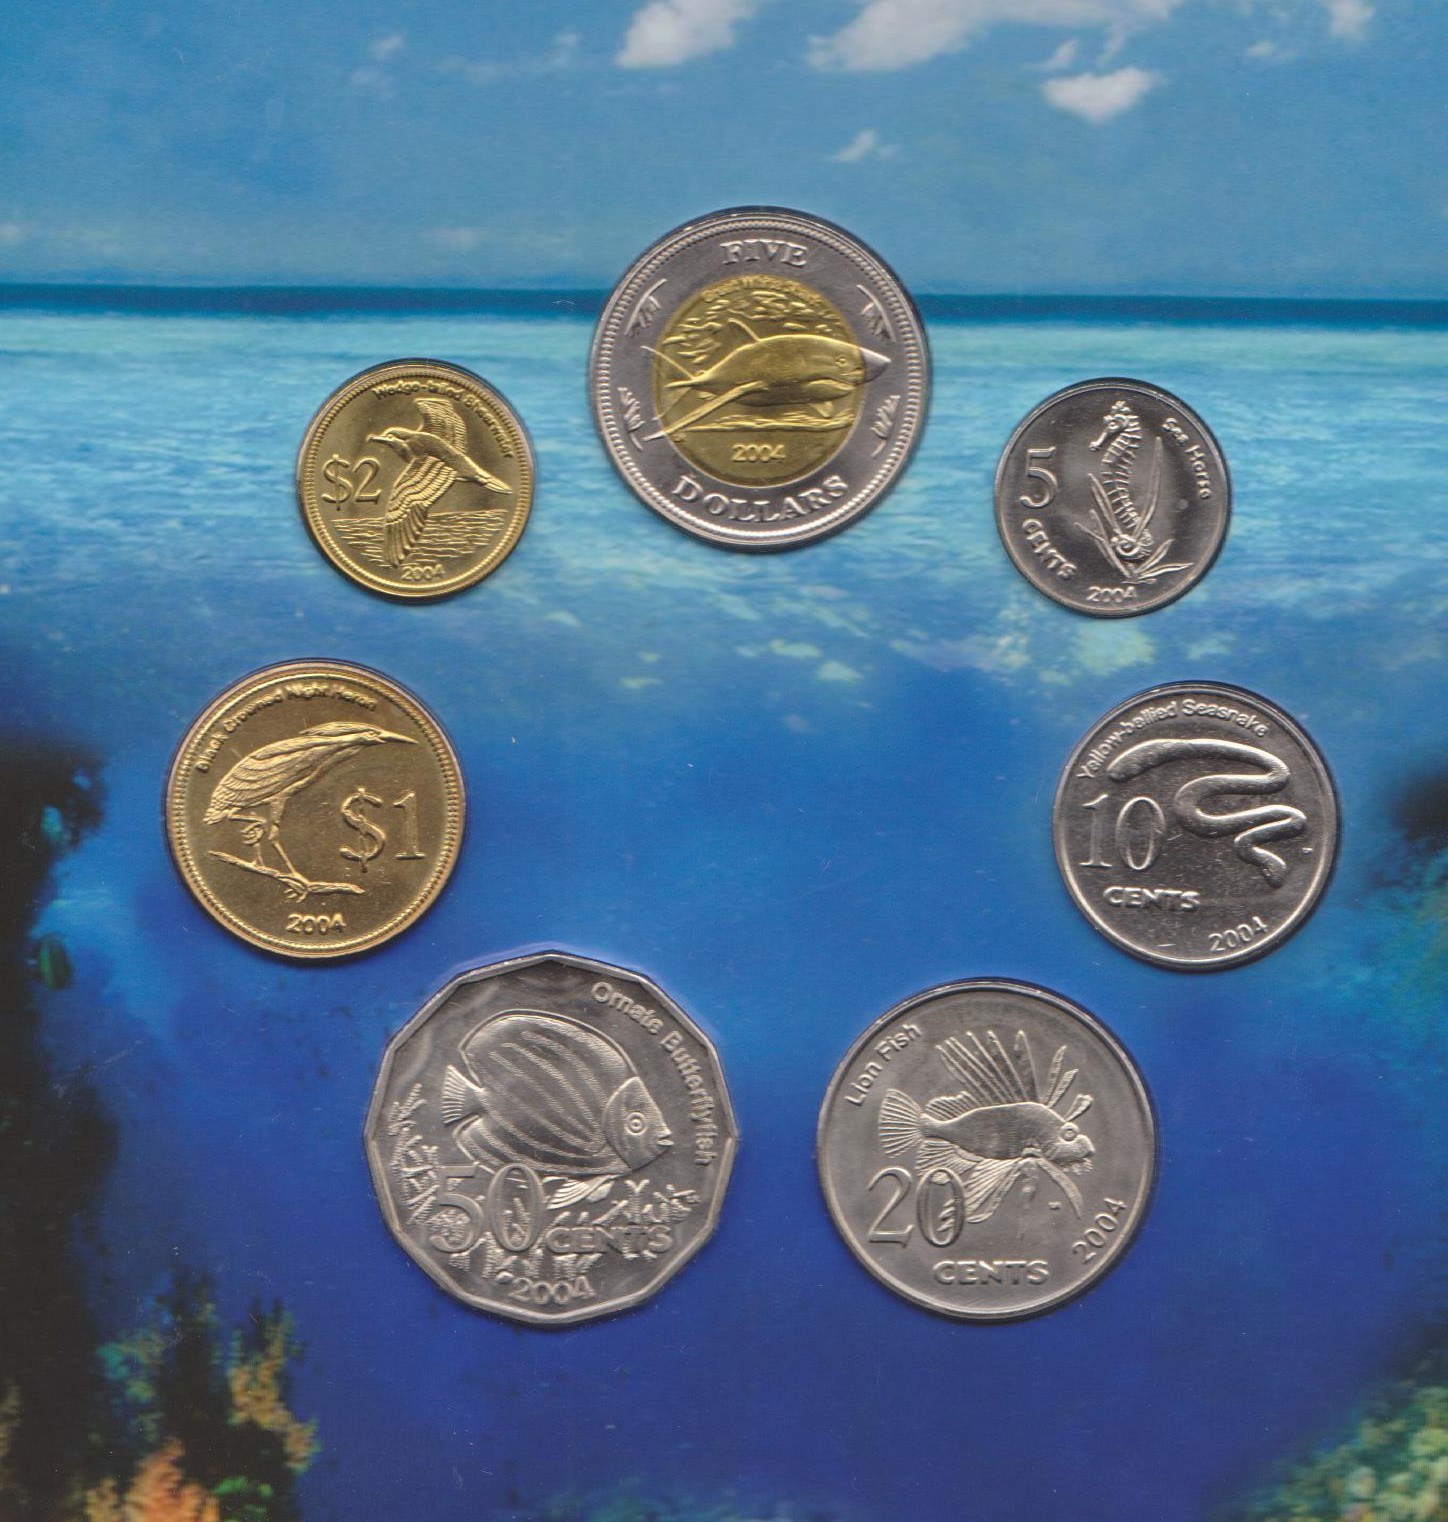 Keeling - Cocos islands 2004 official mint coins set ...